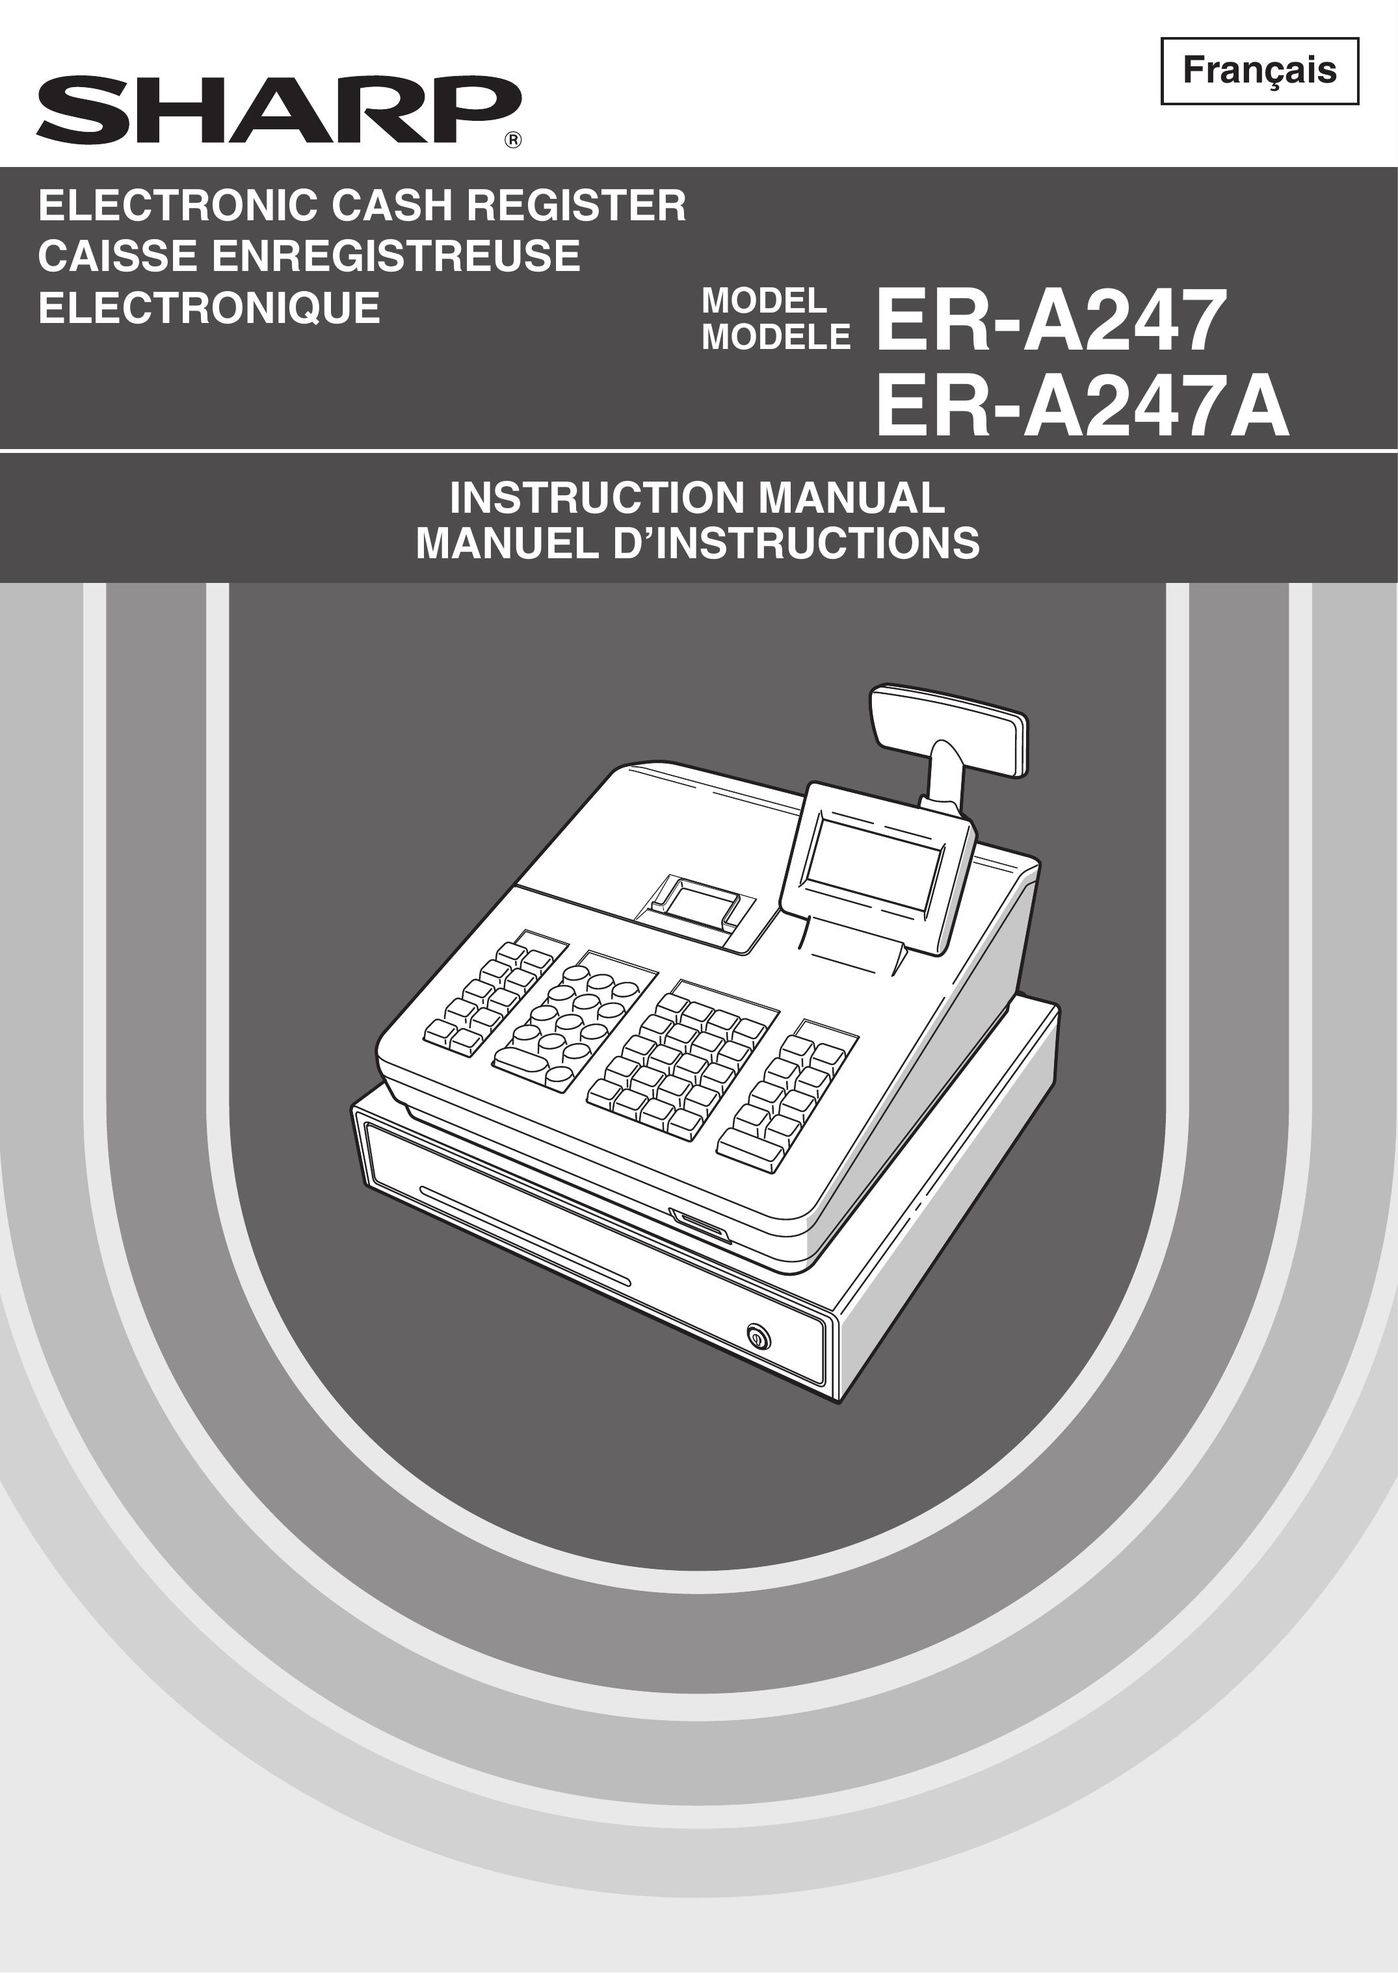 Sharp ER-A247A Cash Register User Manual